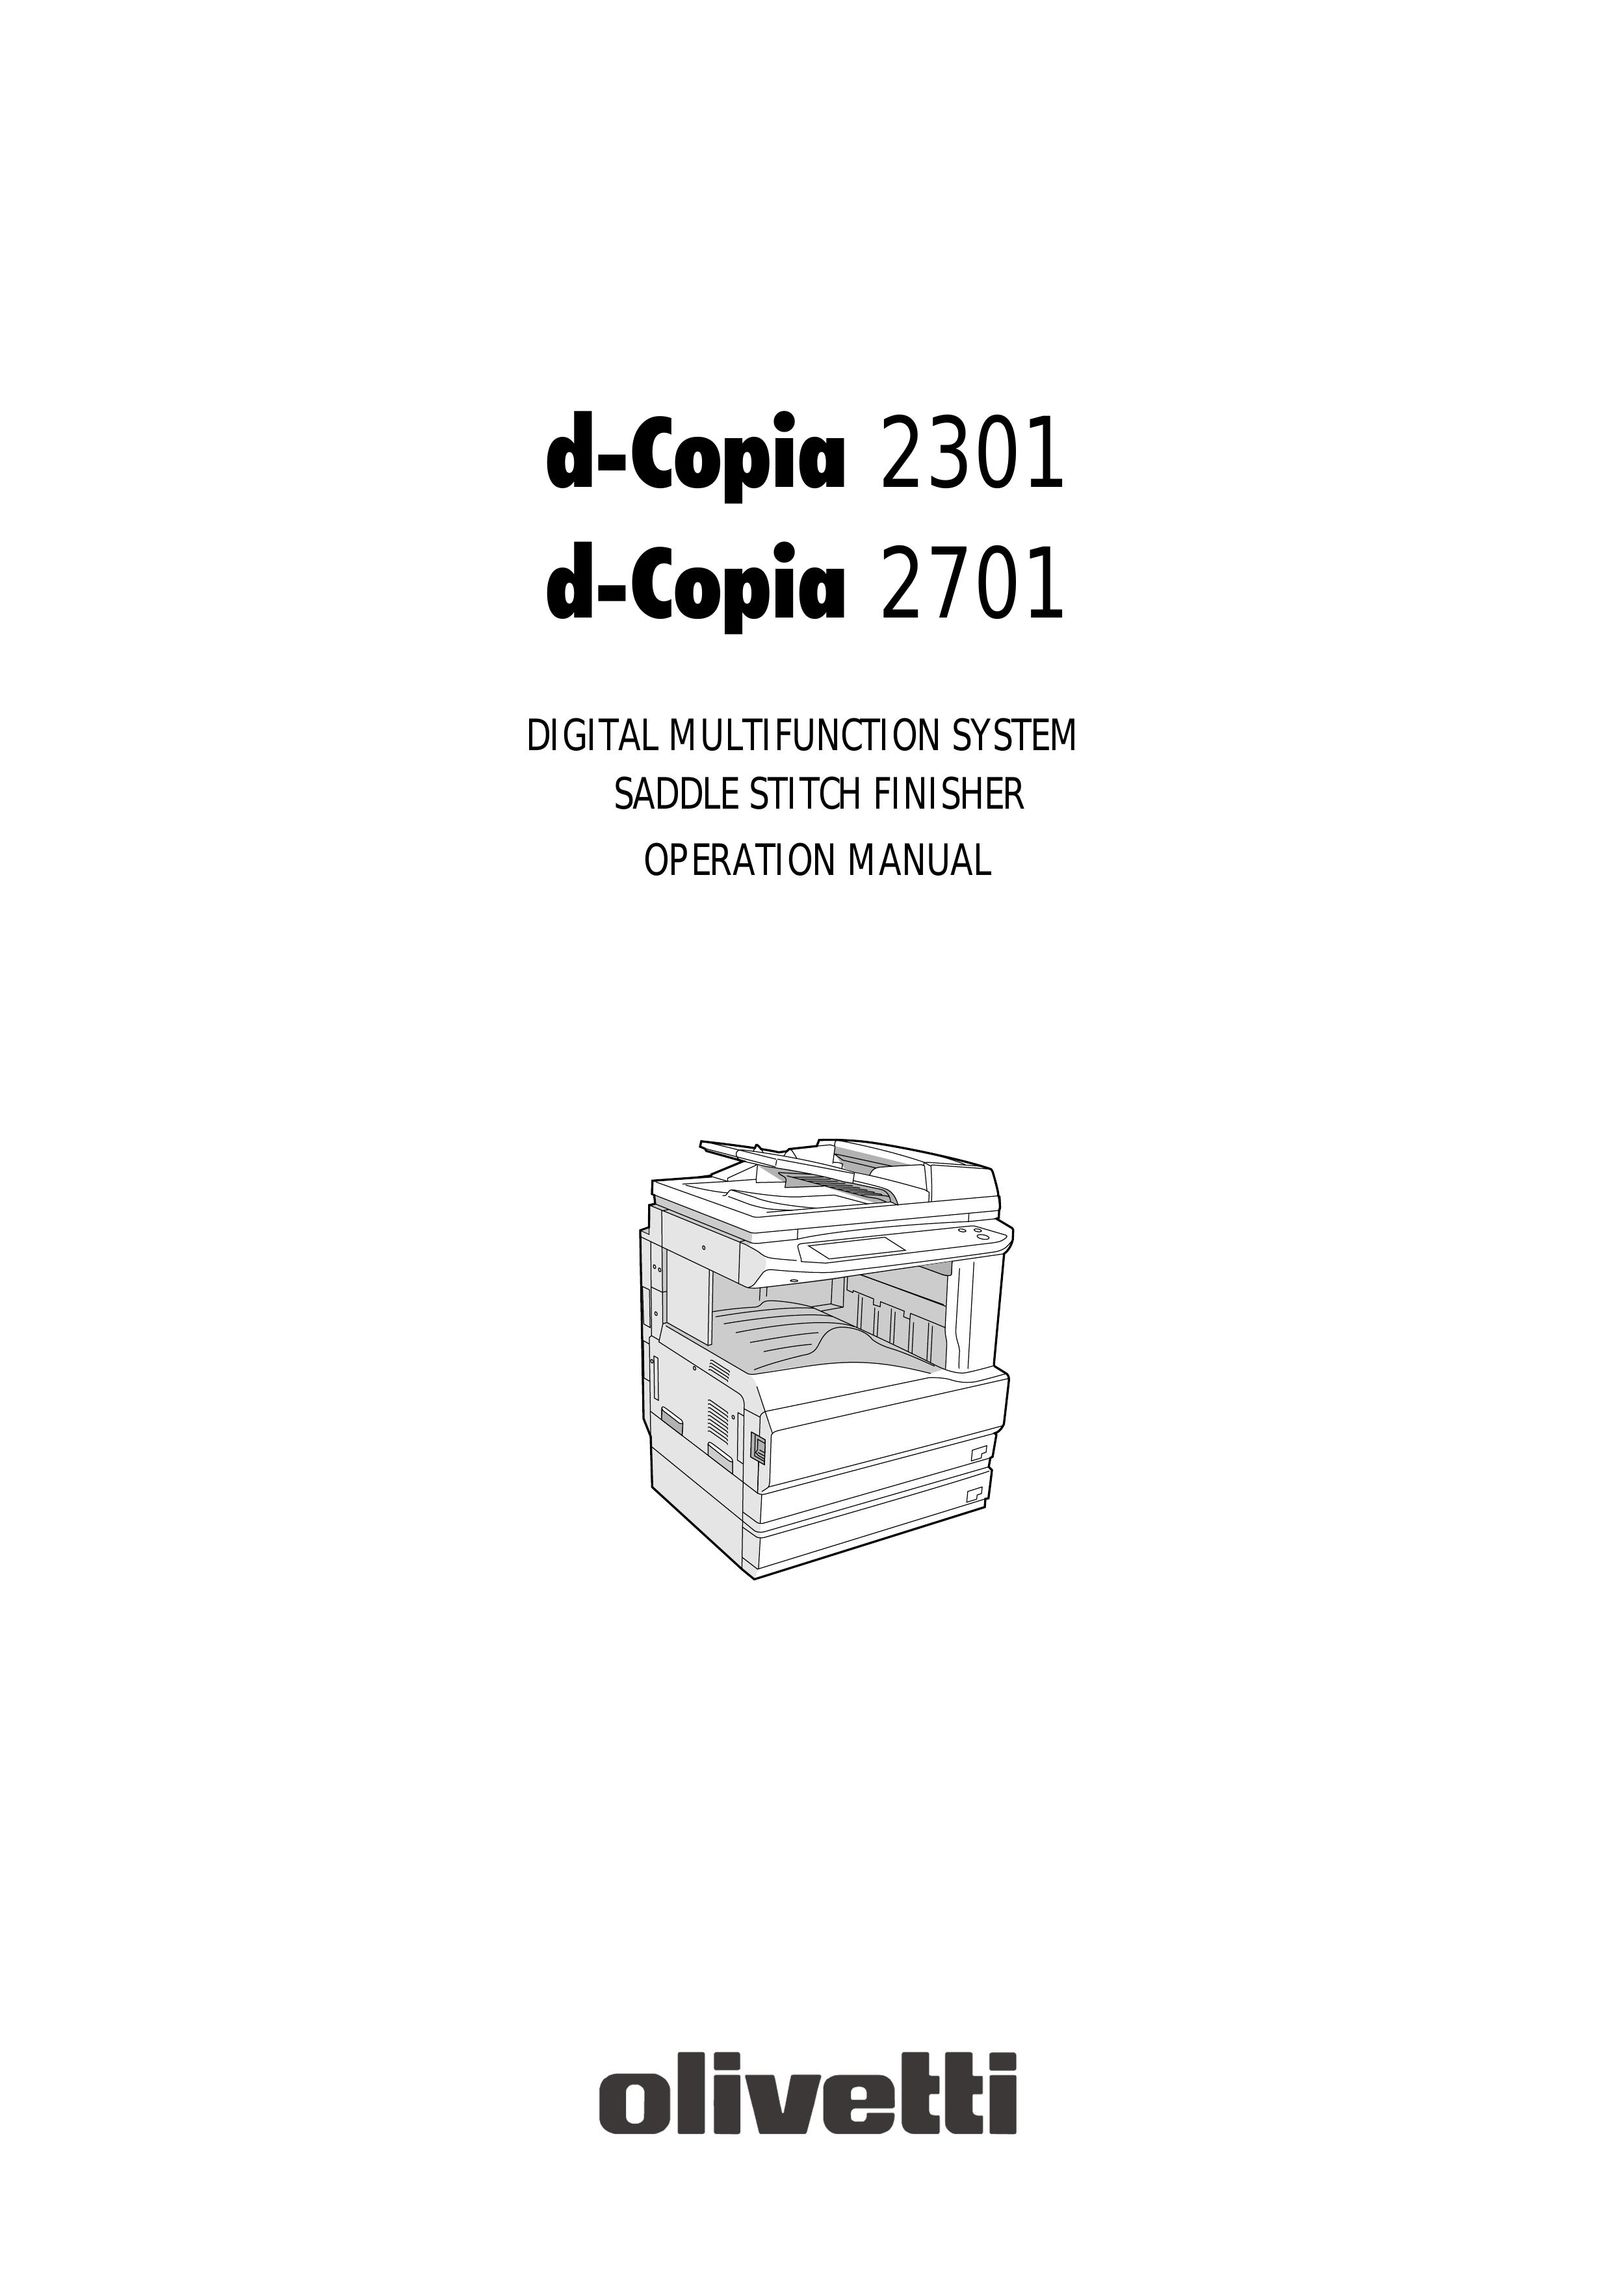 Olivetti 2701 All in One Printer User Manual